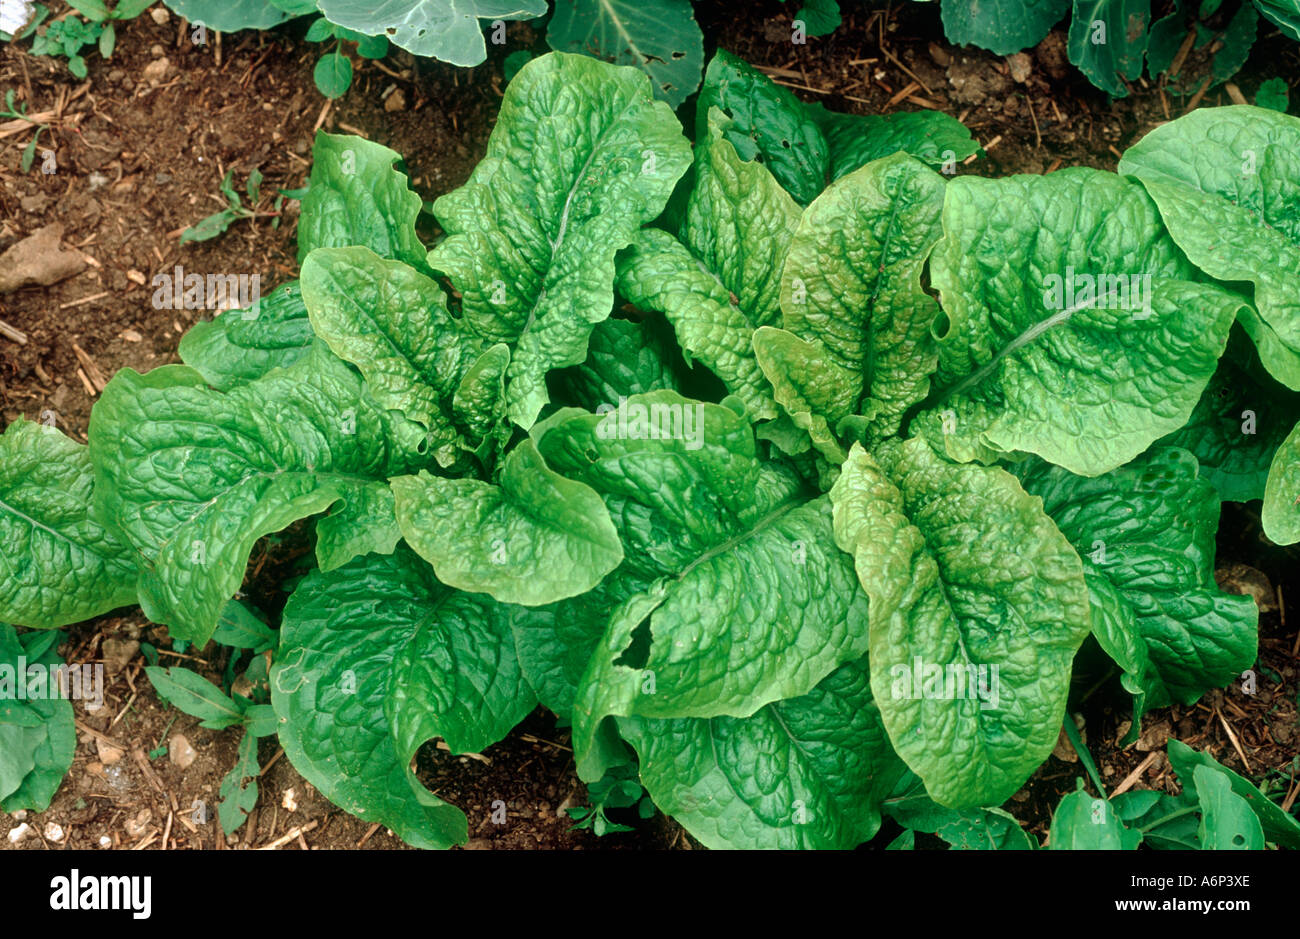 Mature celtuce plant a type of lettuce salad vegetable Stock Photo